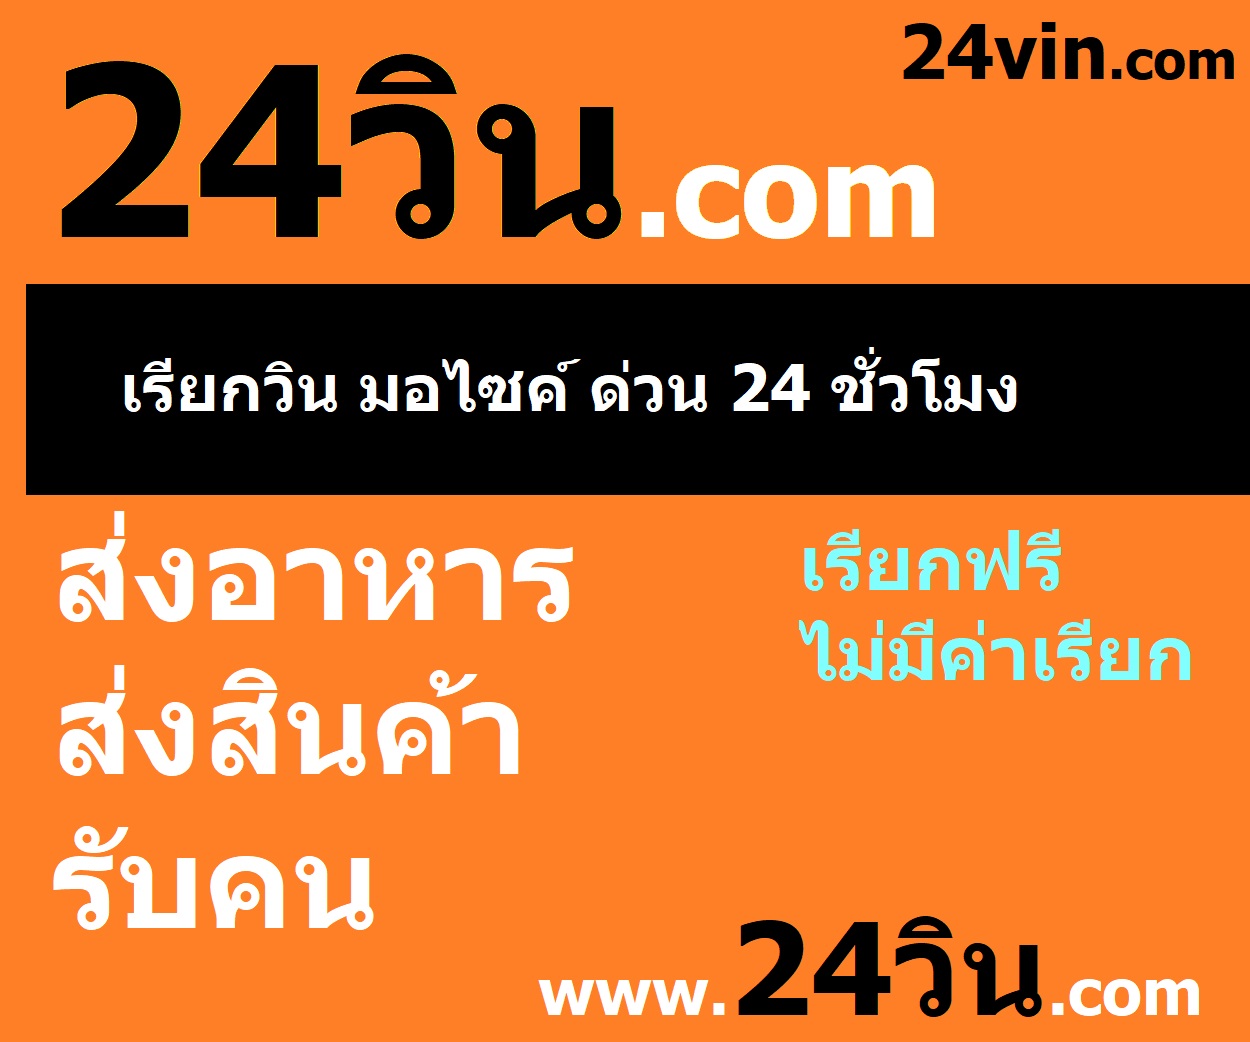 24vin.com